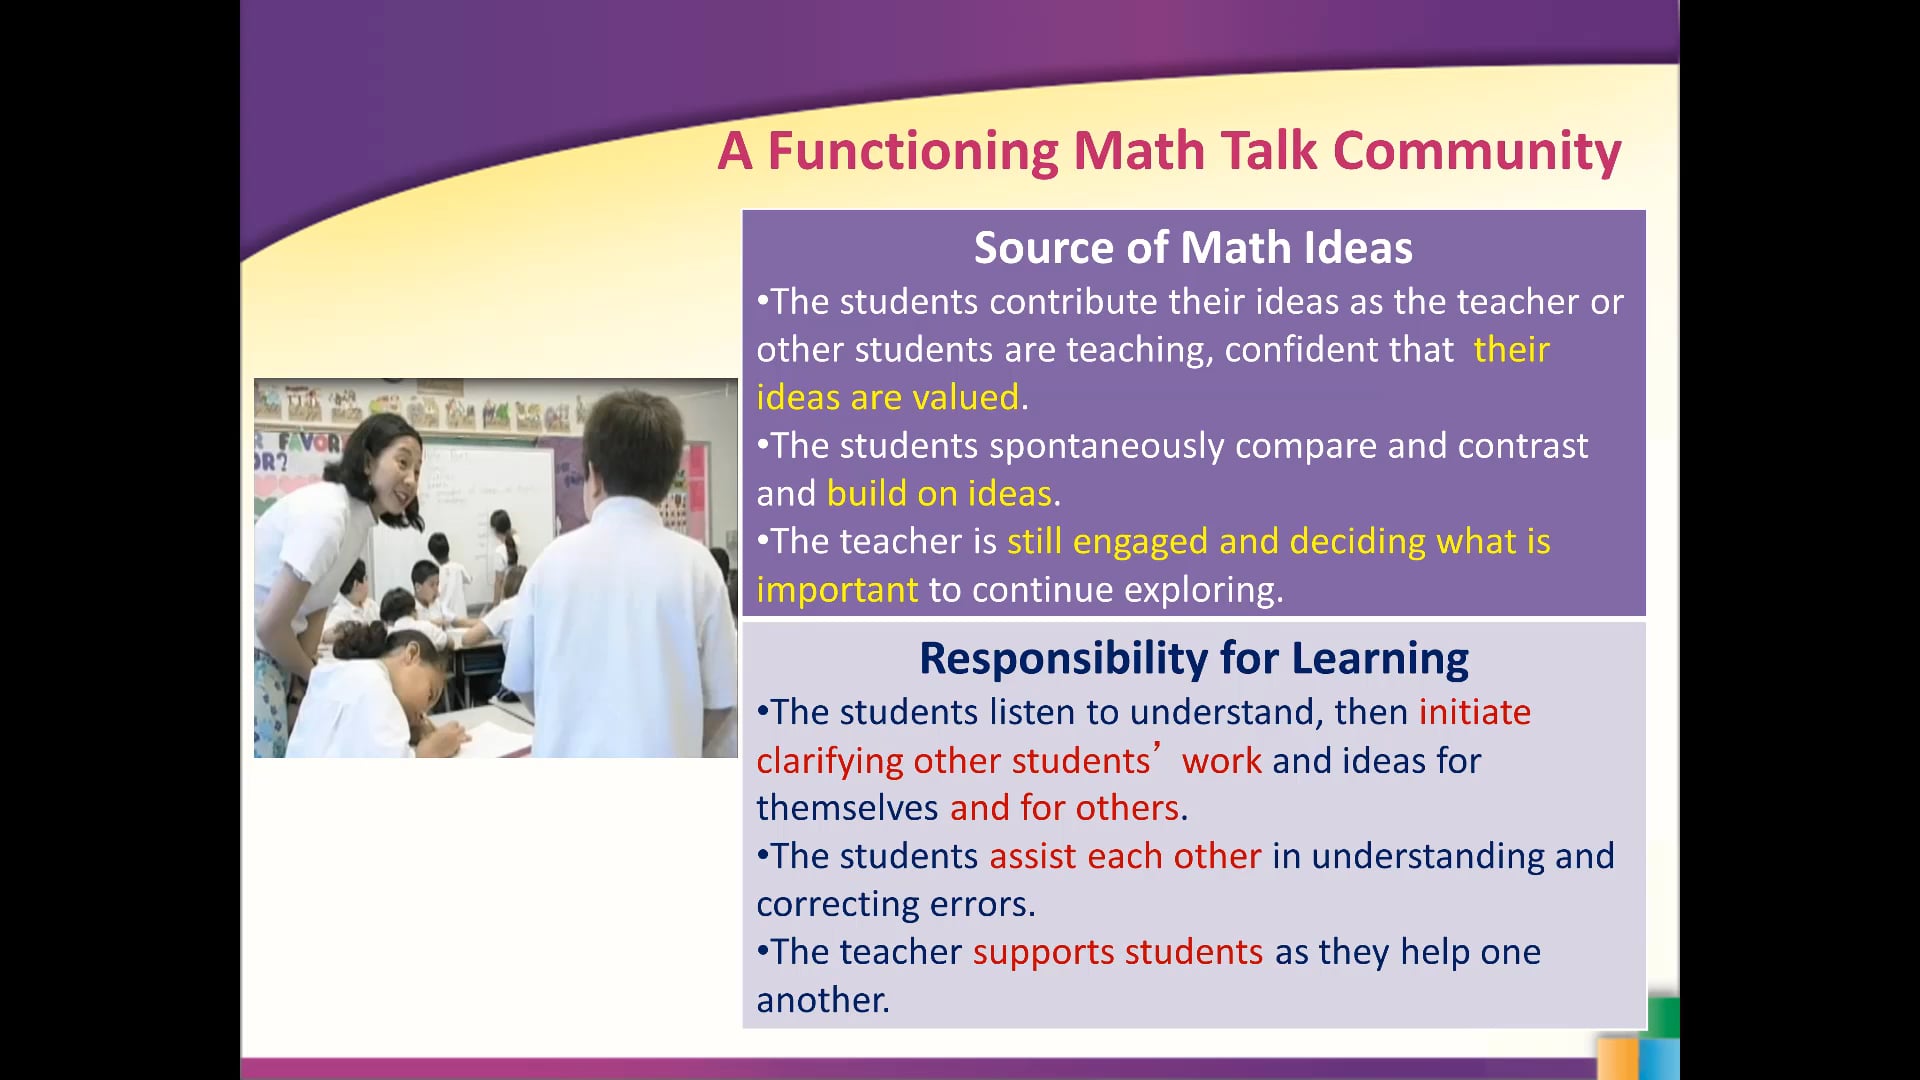 Part 2 - Math Talk Community